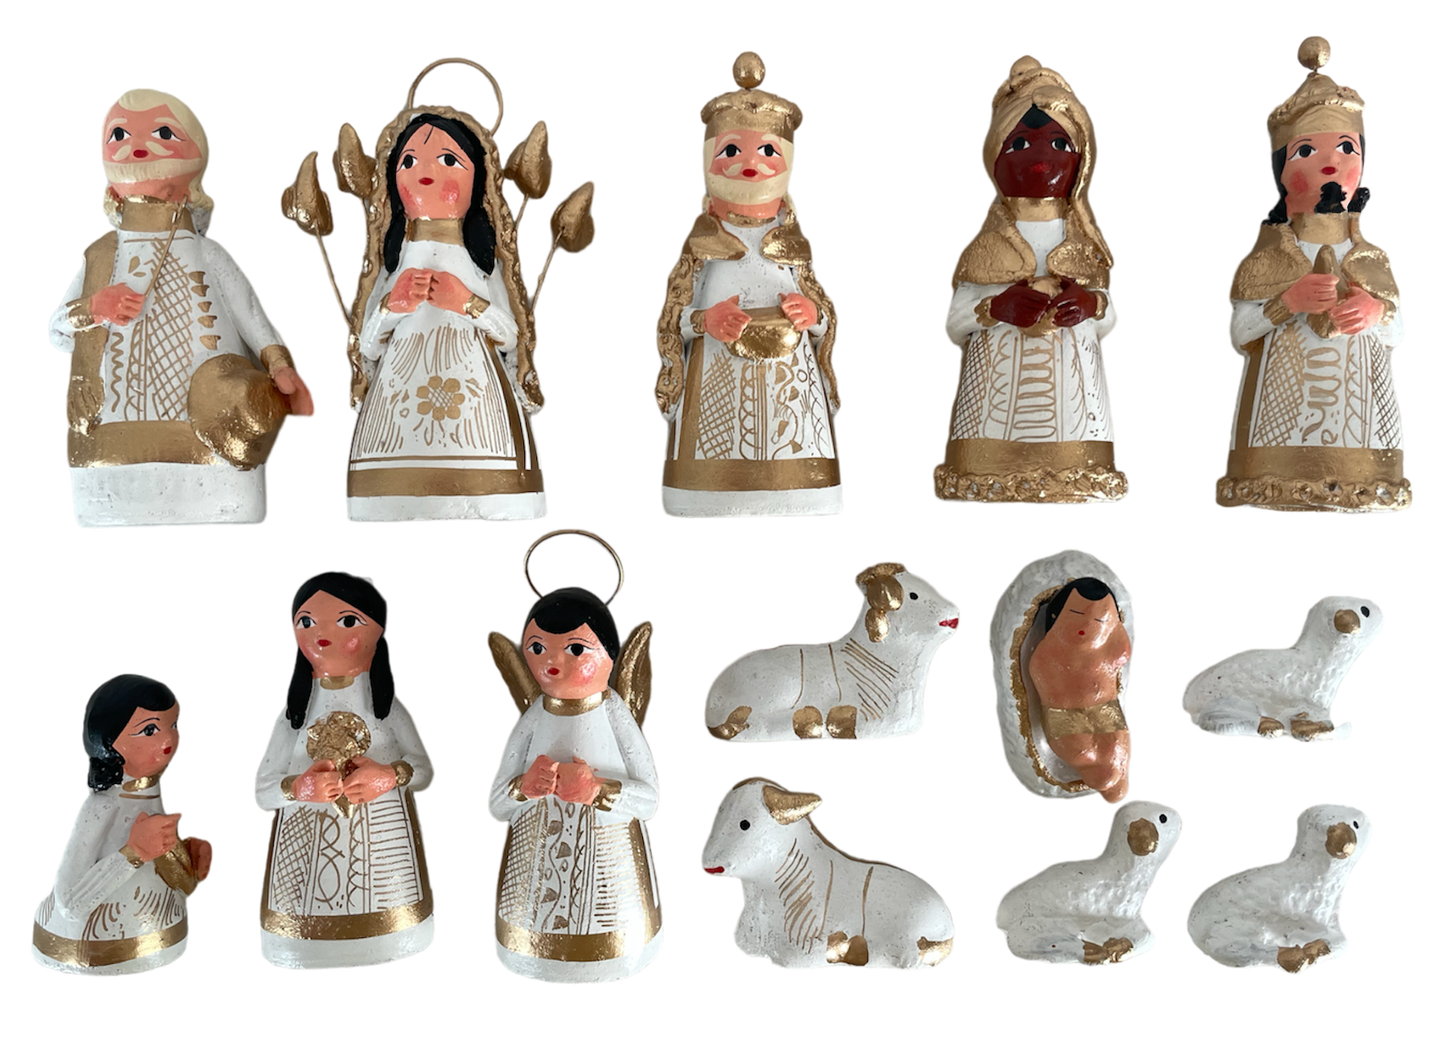 Medium nativity scene with 14 figurines, white and gold.